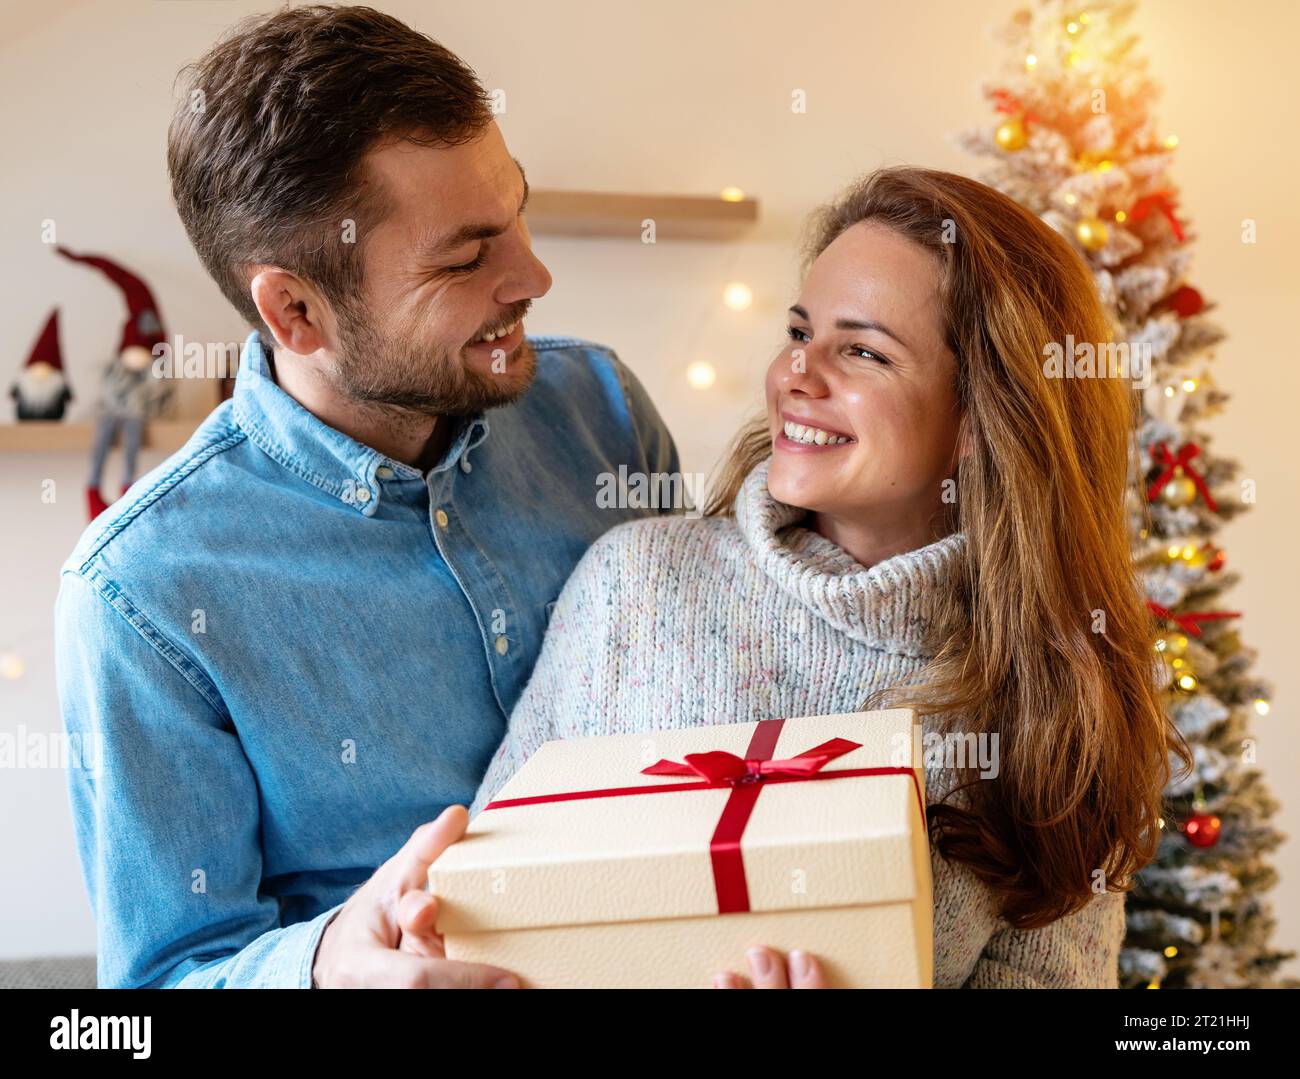 Happy heterosexual couple and Christmas presents. Boyfriend gives xmas gift to girlfriend. Season of giving. Stock Photo